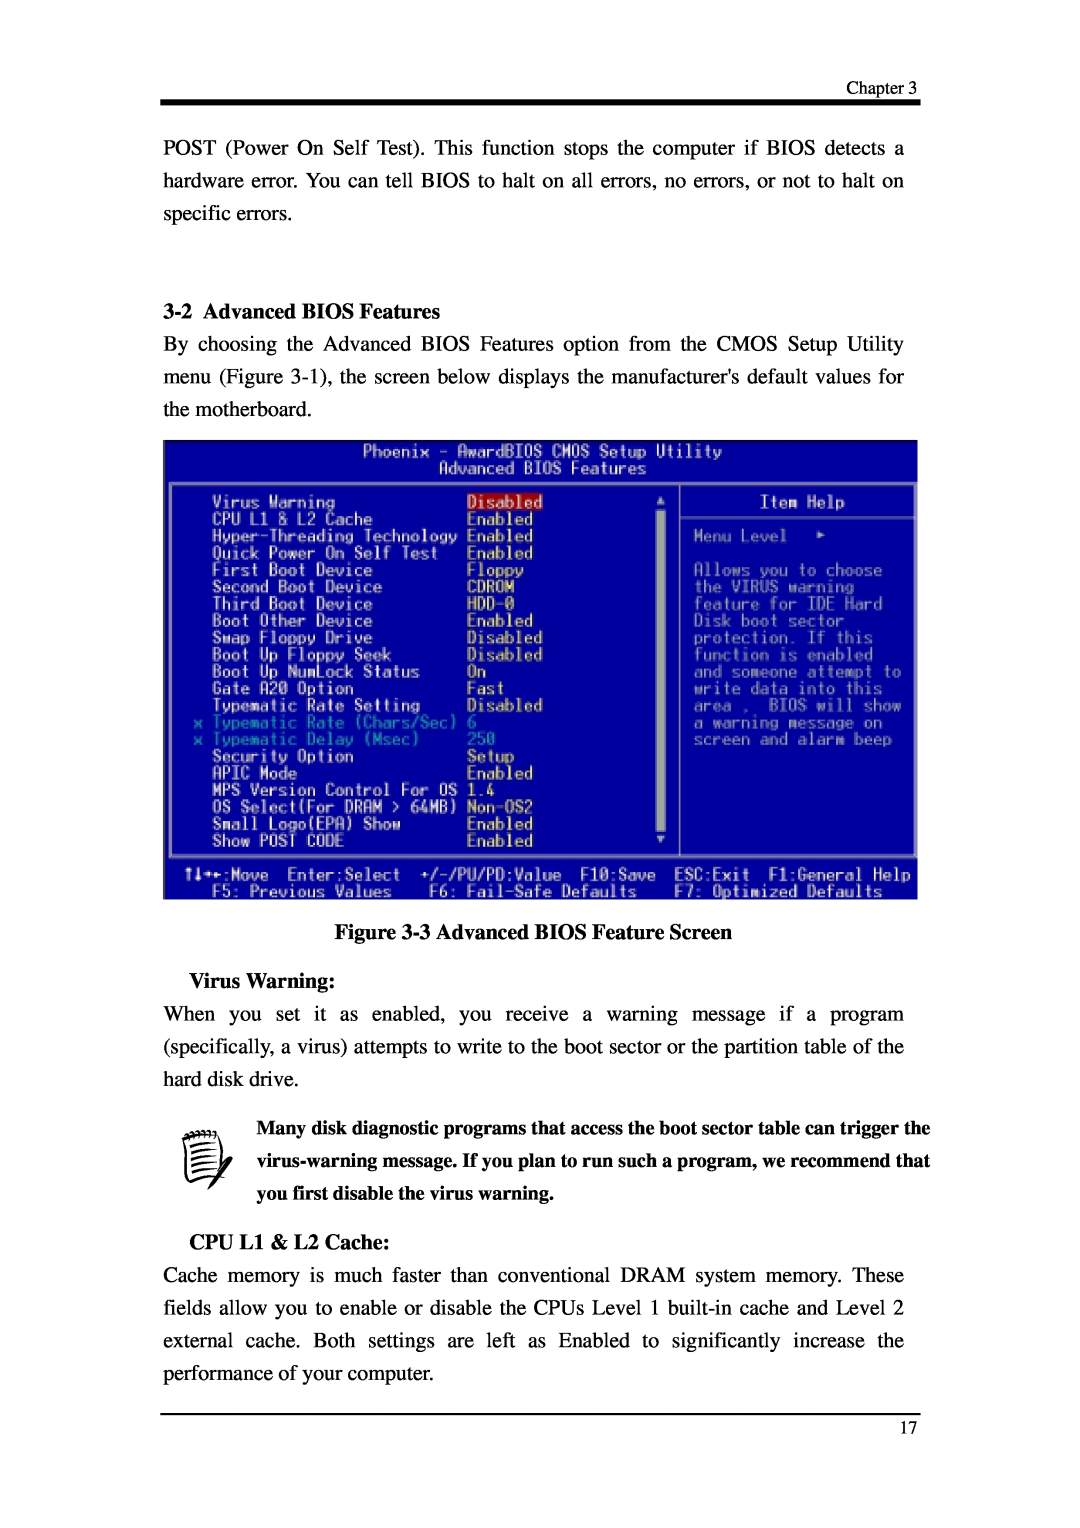 Intel 9EJL4 manual 3-2Advanced BIOS Features, 3Advanced BIOS Feature Screen, Virus Warning, CPU L1 & L2 Cache, Chapter 